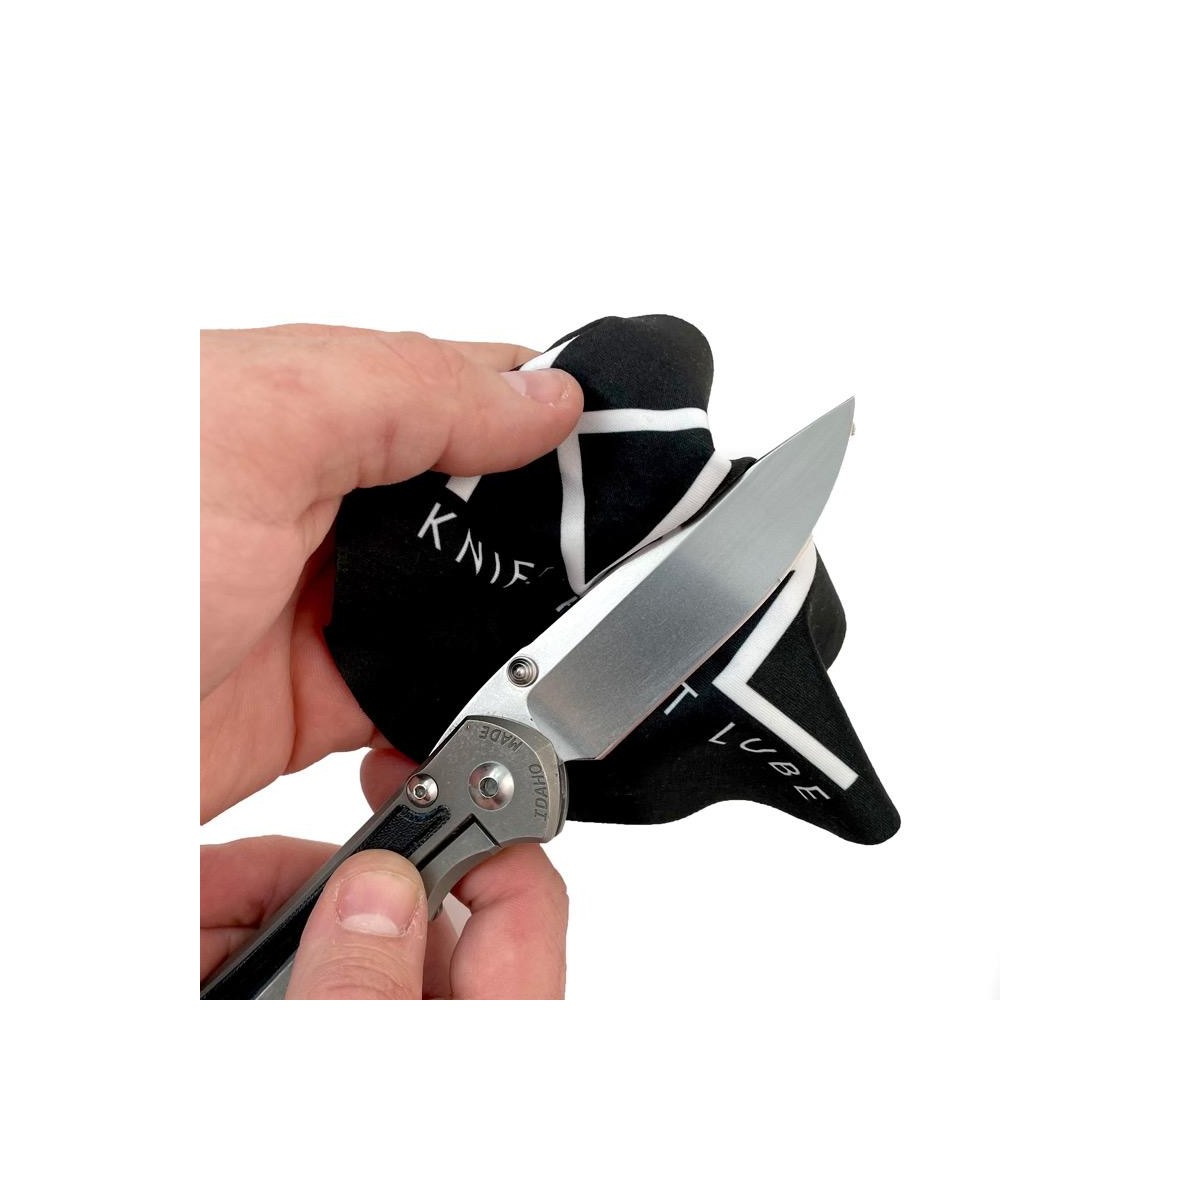 KPL Knife Pivot Lube – Journey Tool Co